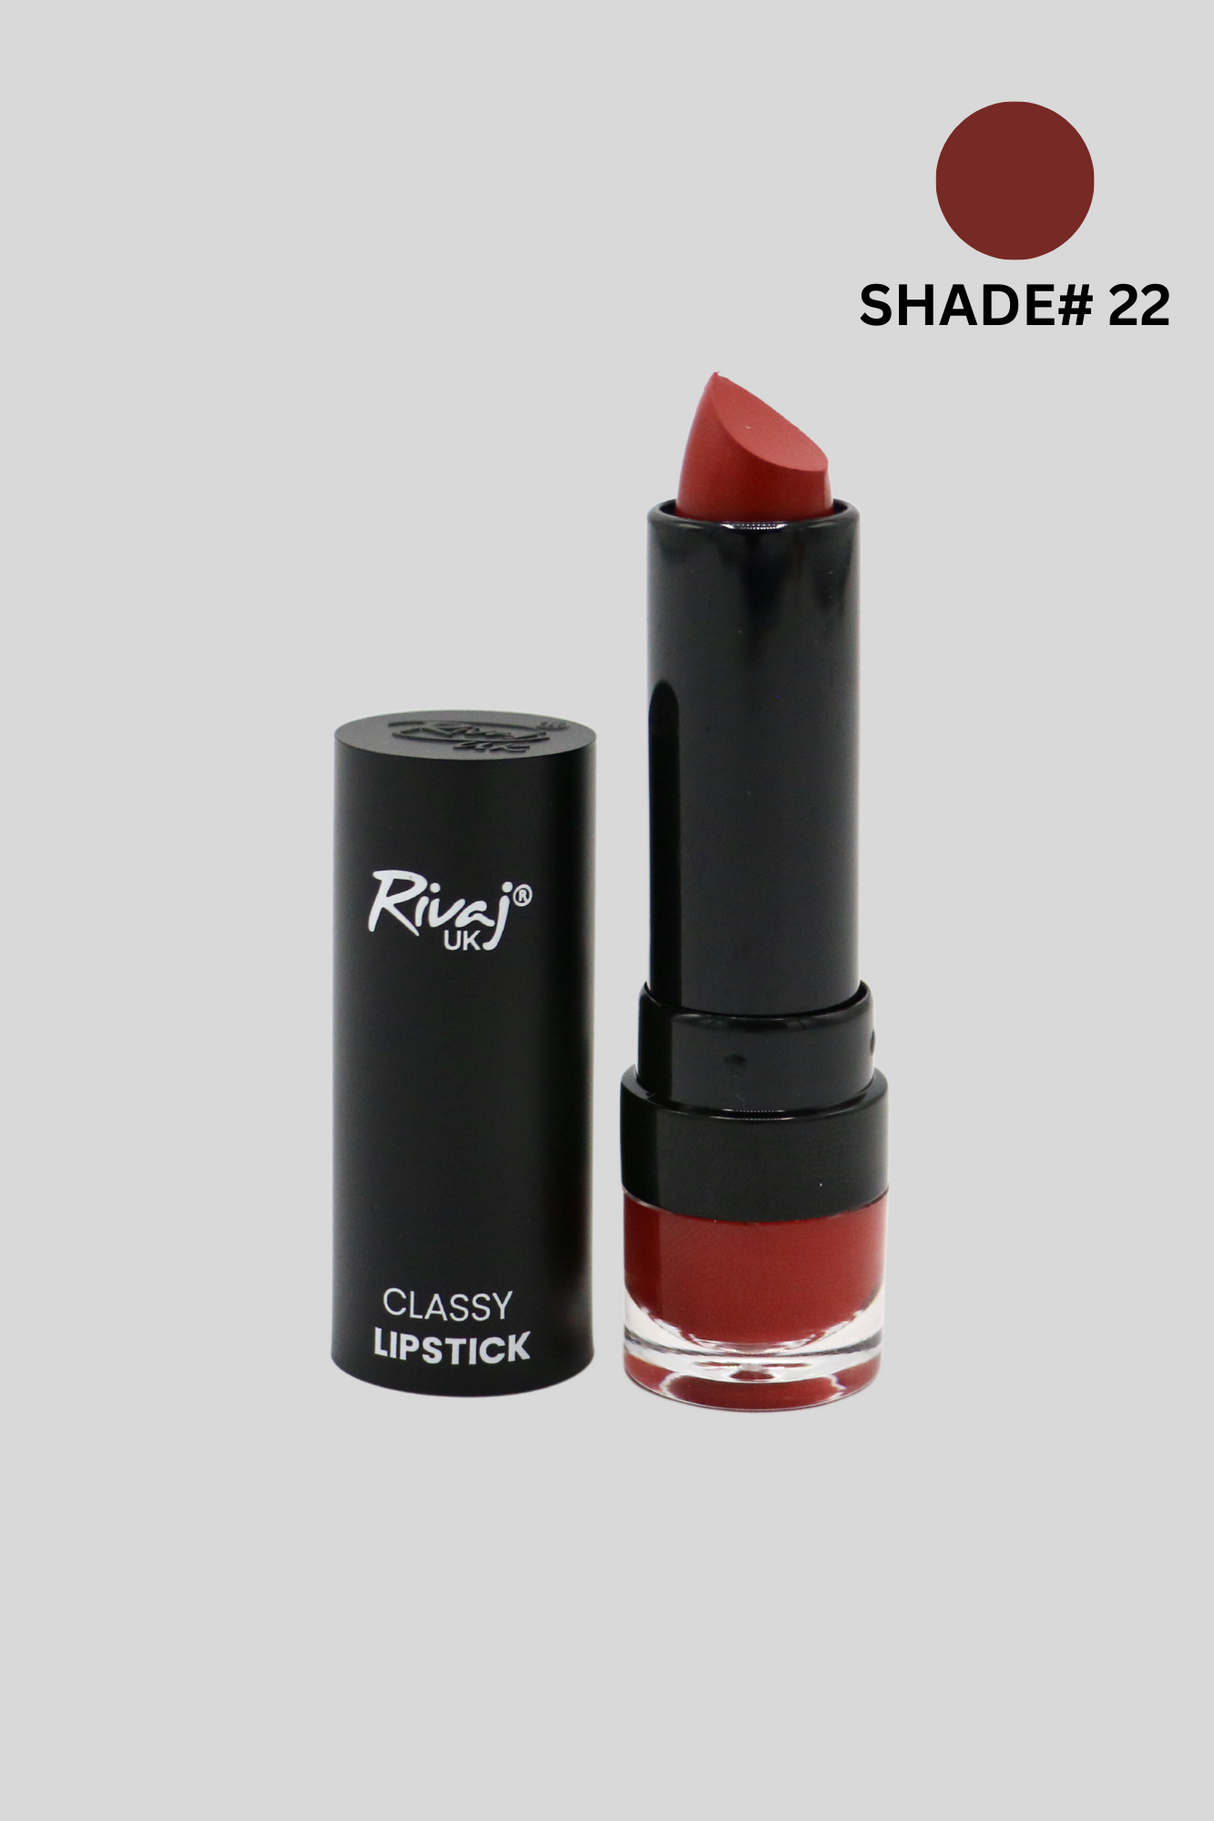 rivaj uk lipstick classy 22